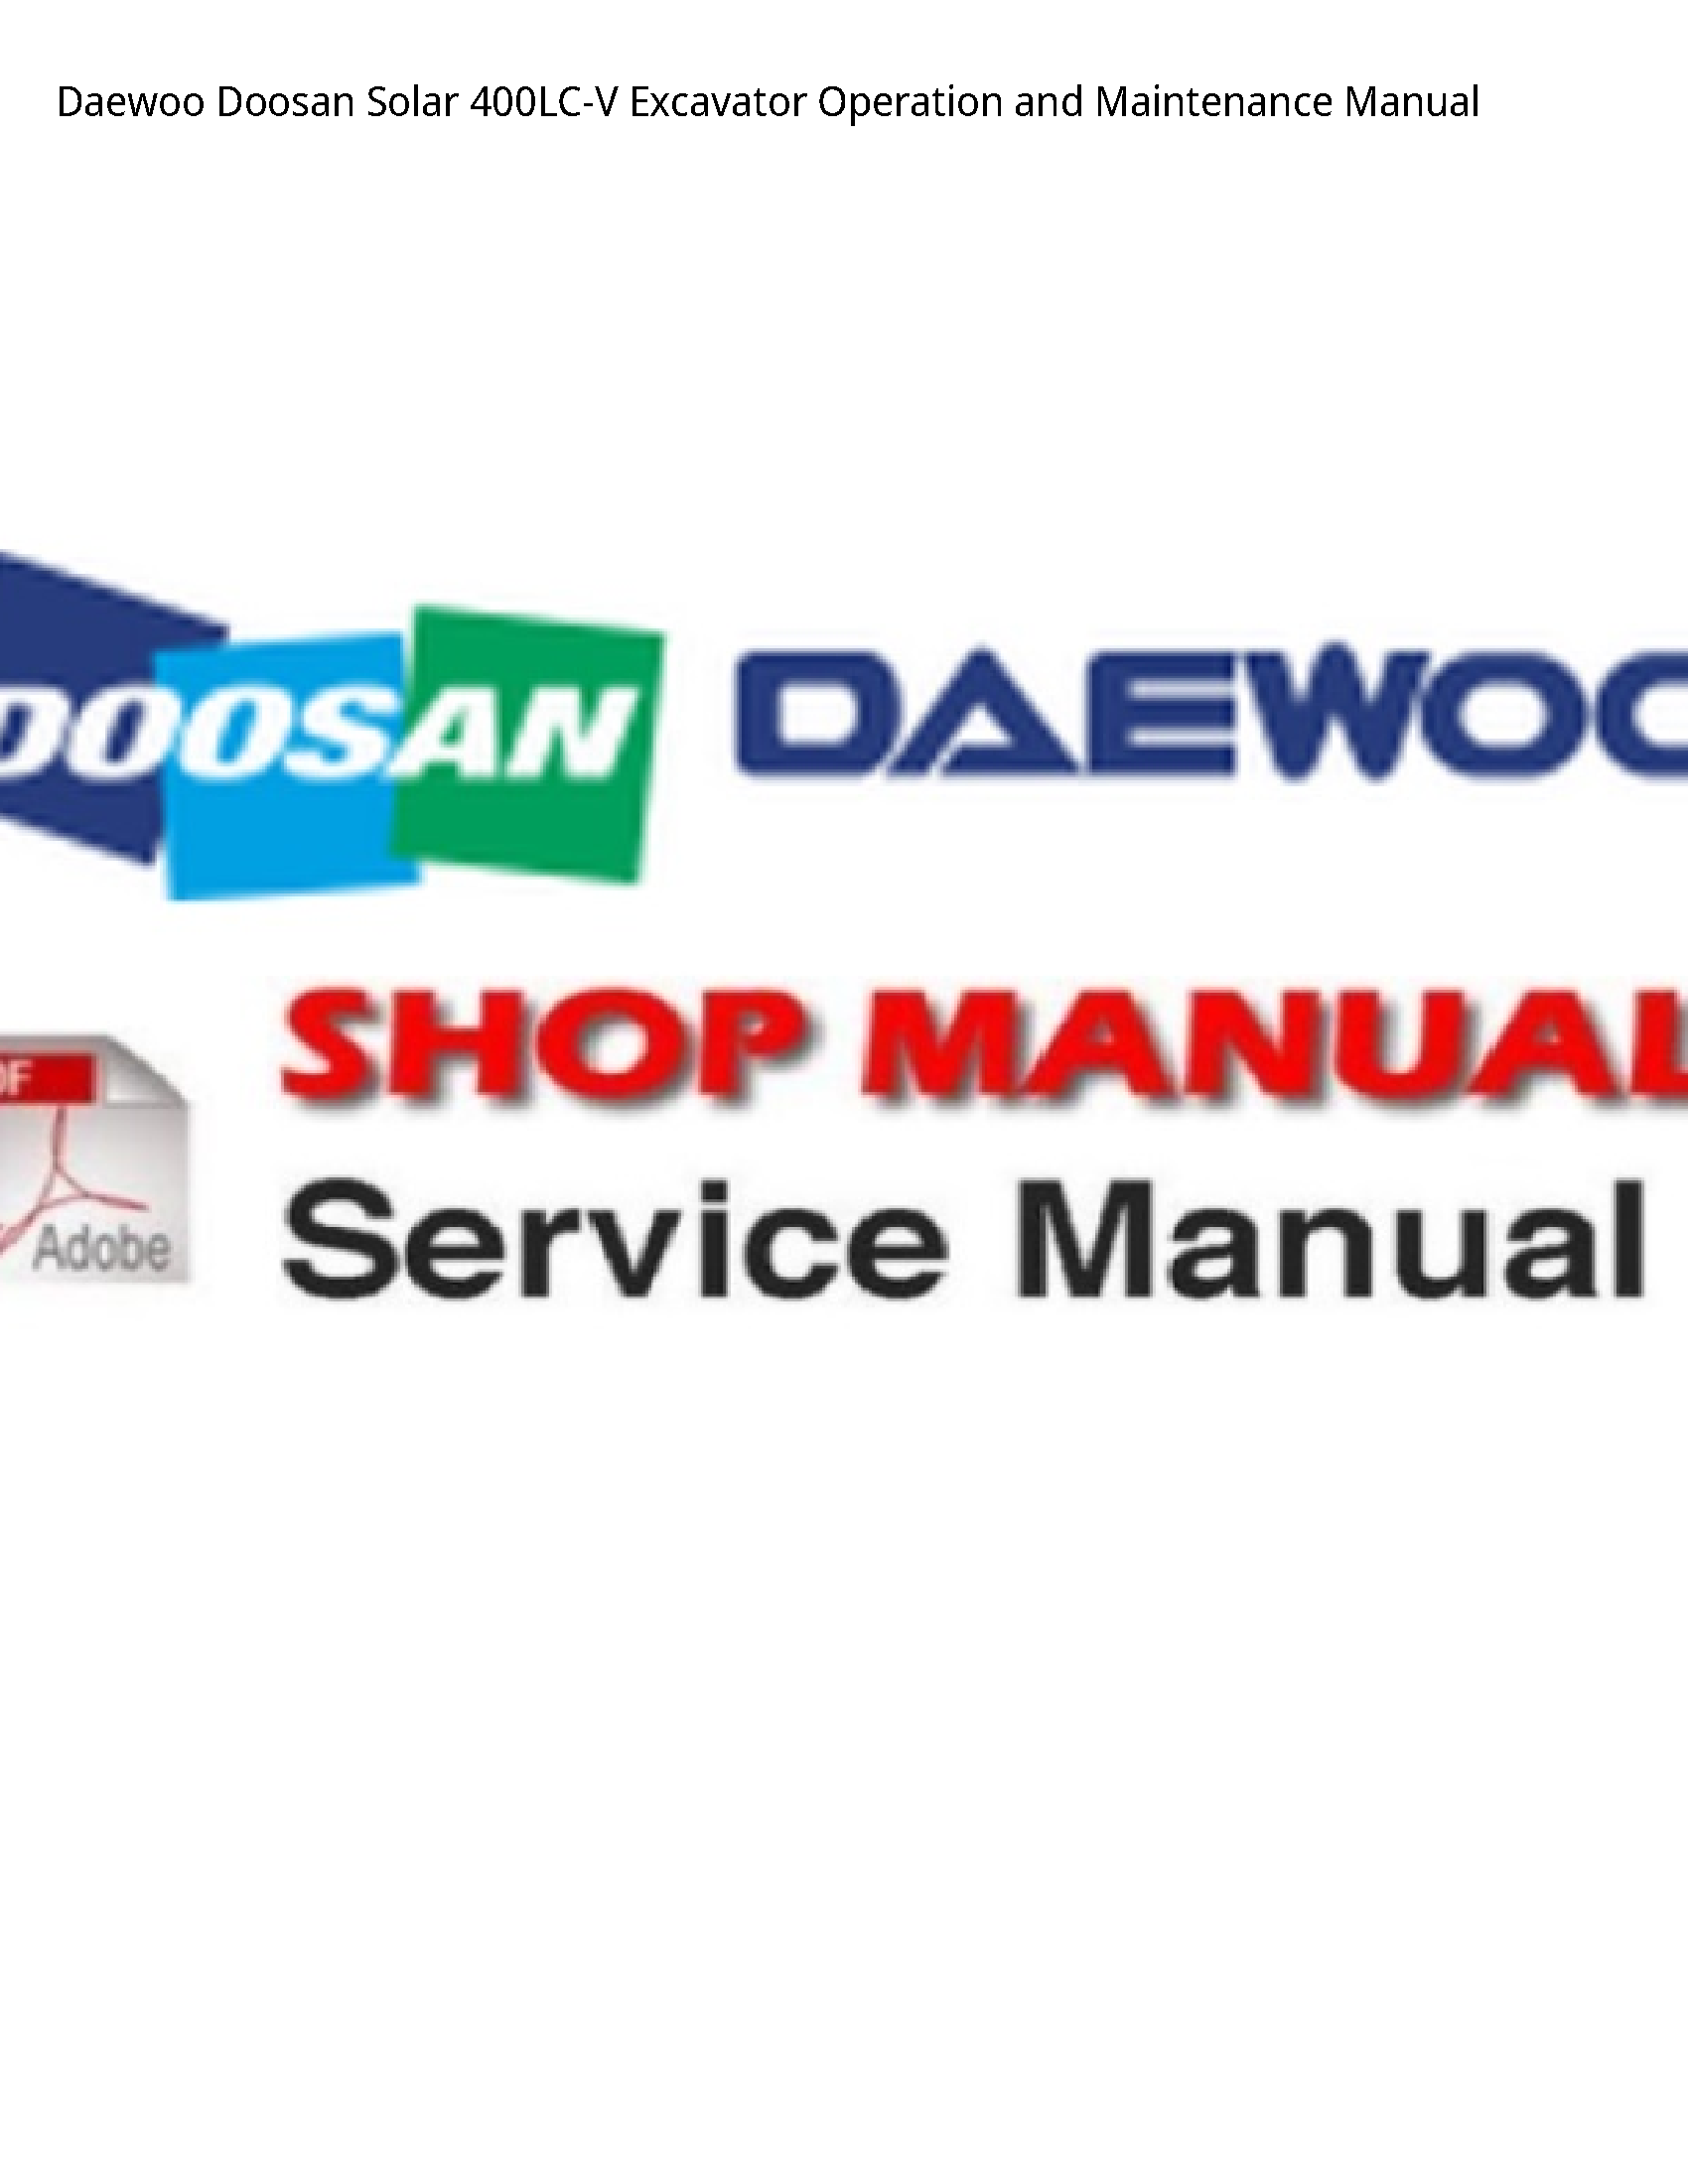 Daewoo Doosan 400LC-V Solar Excavator Operation  Maintenance manual